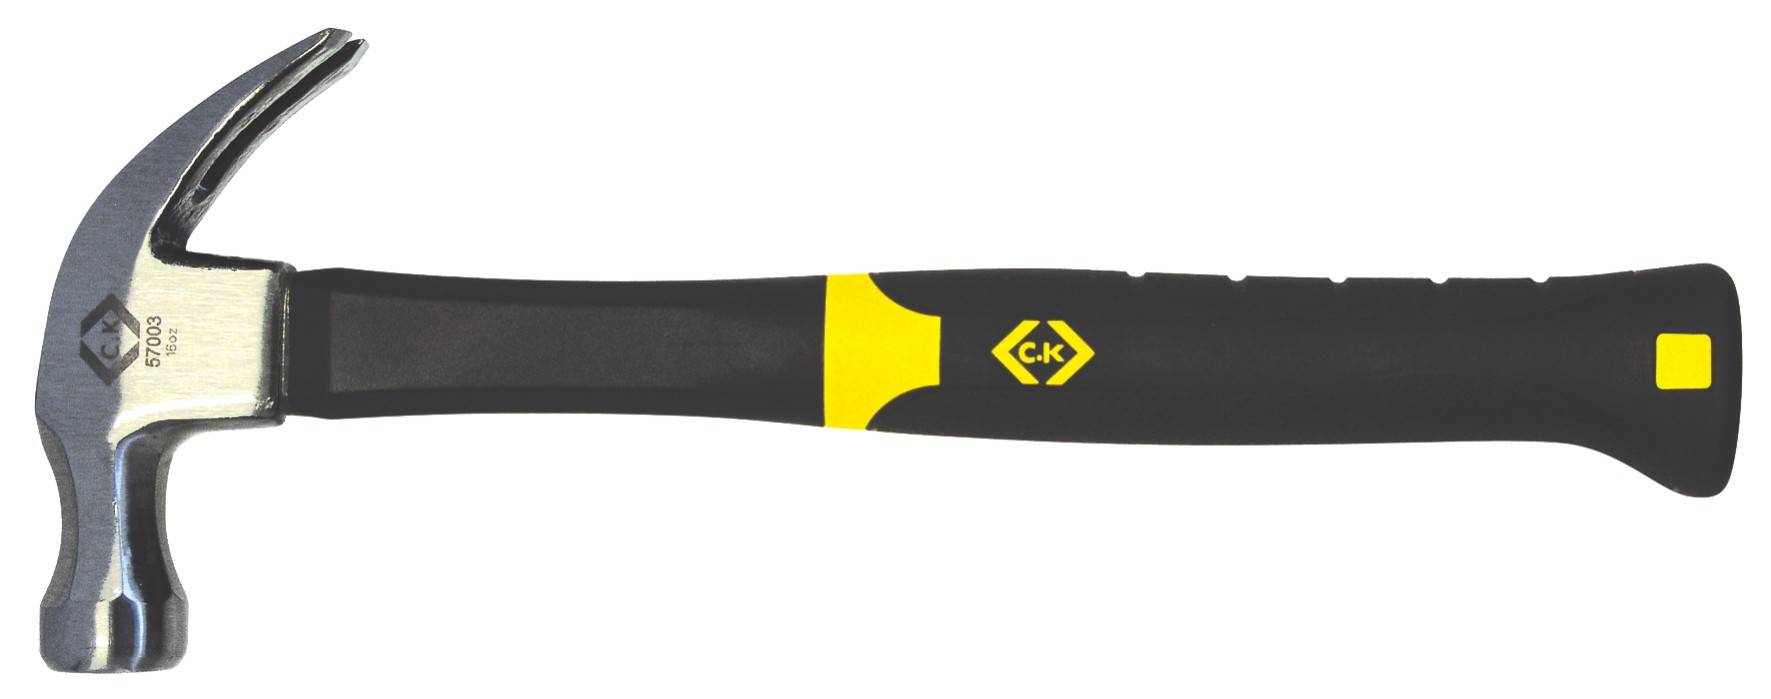 Claw Hammer Anti Vibration Fibreglass Shaft 16oz CK Tools 357003